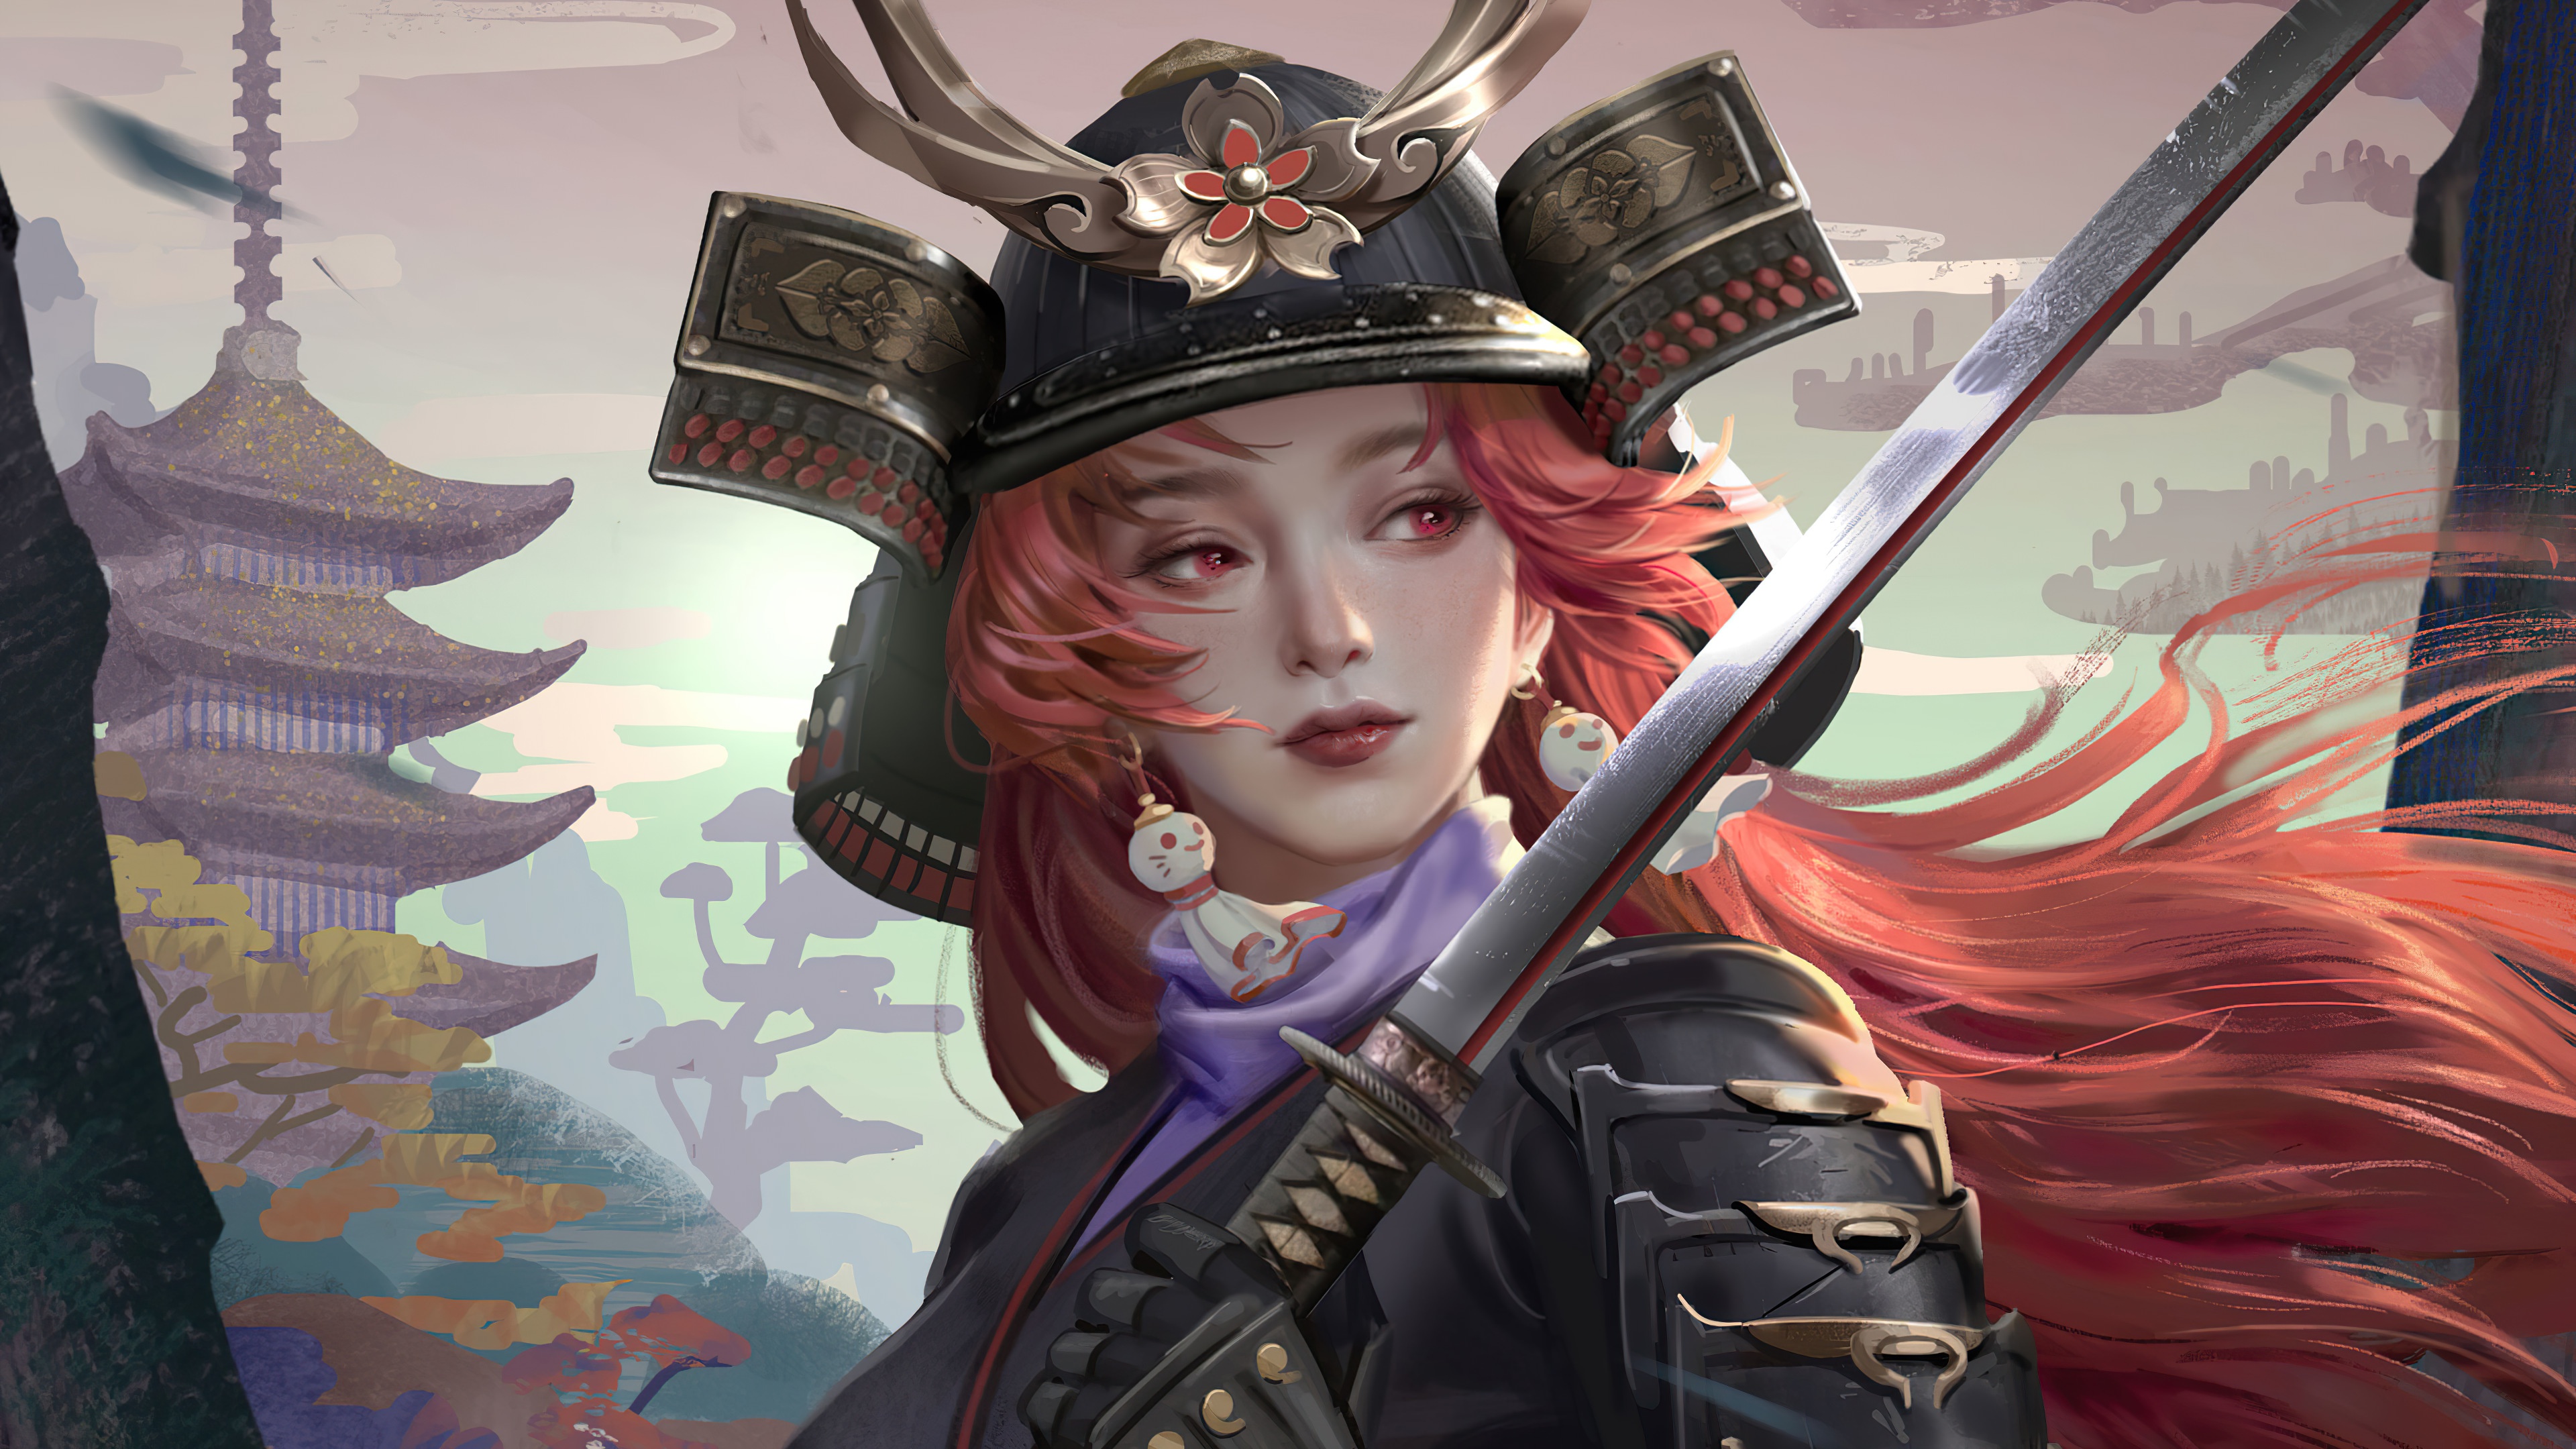 General 3840x2160 samurai katana sword helmet armor pagoda fantasy art artwork fantasy girl digital art